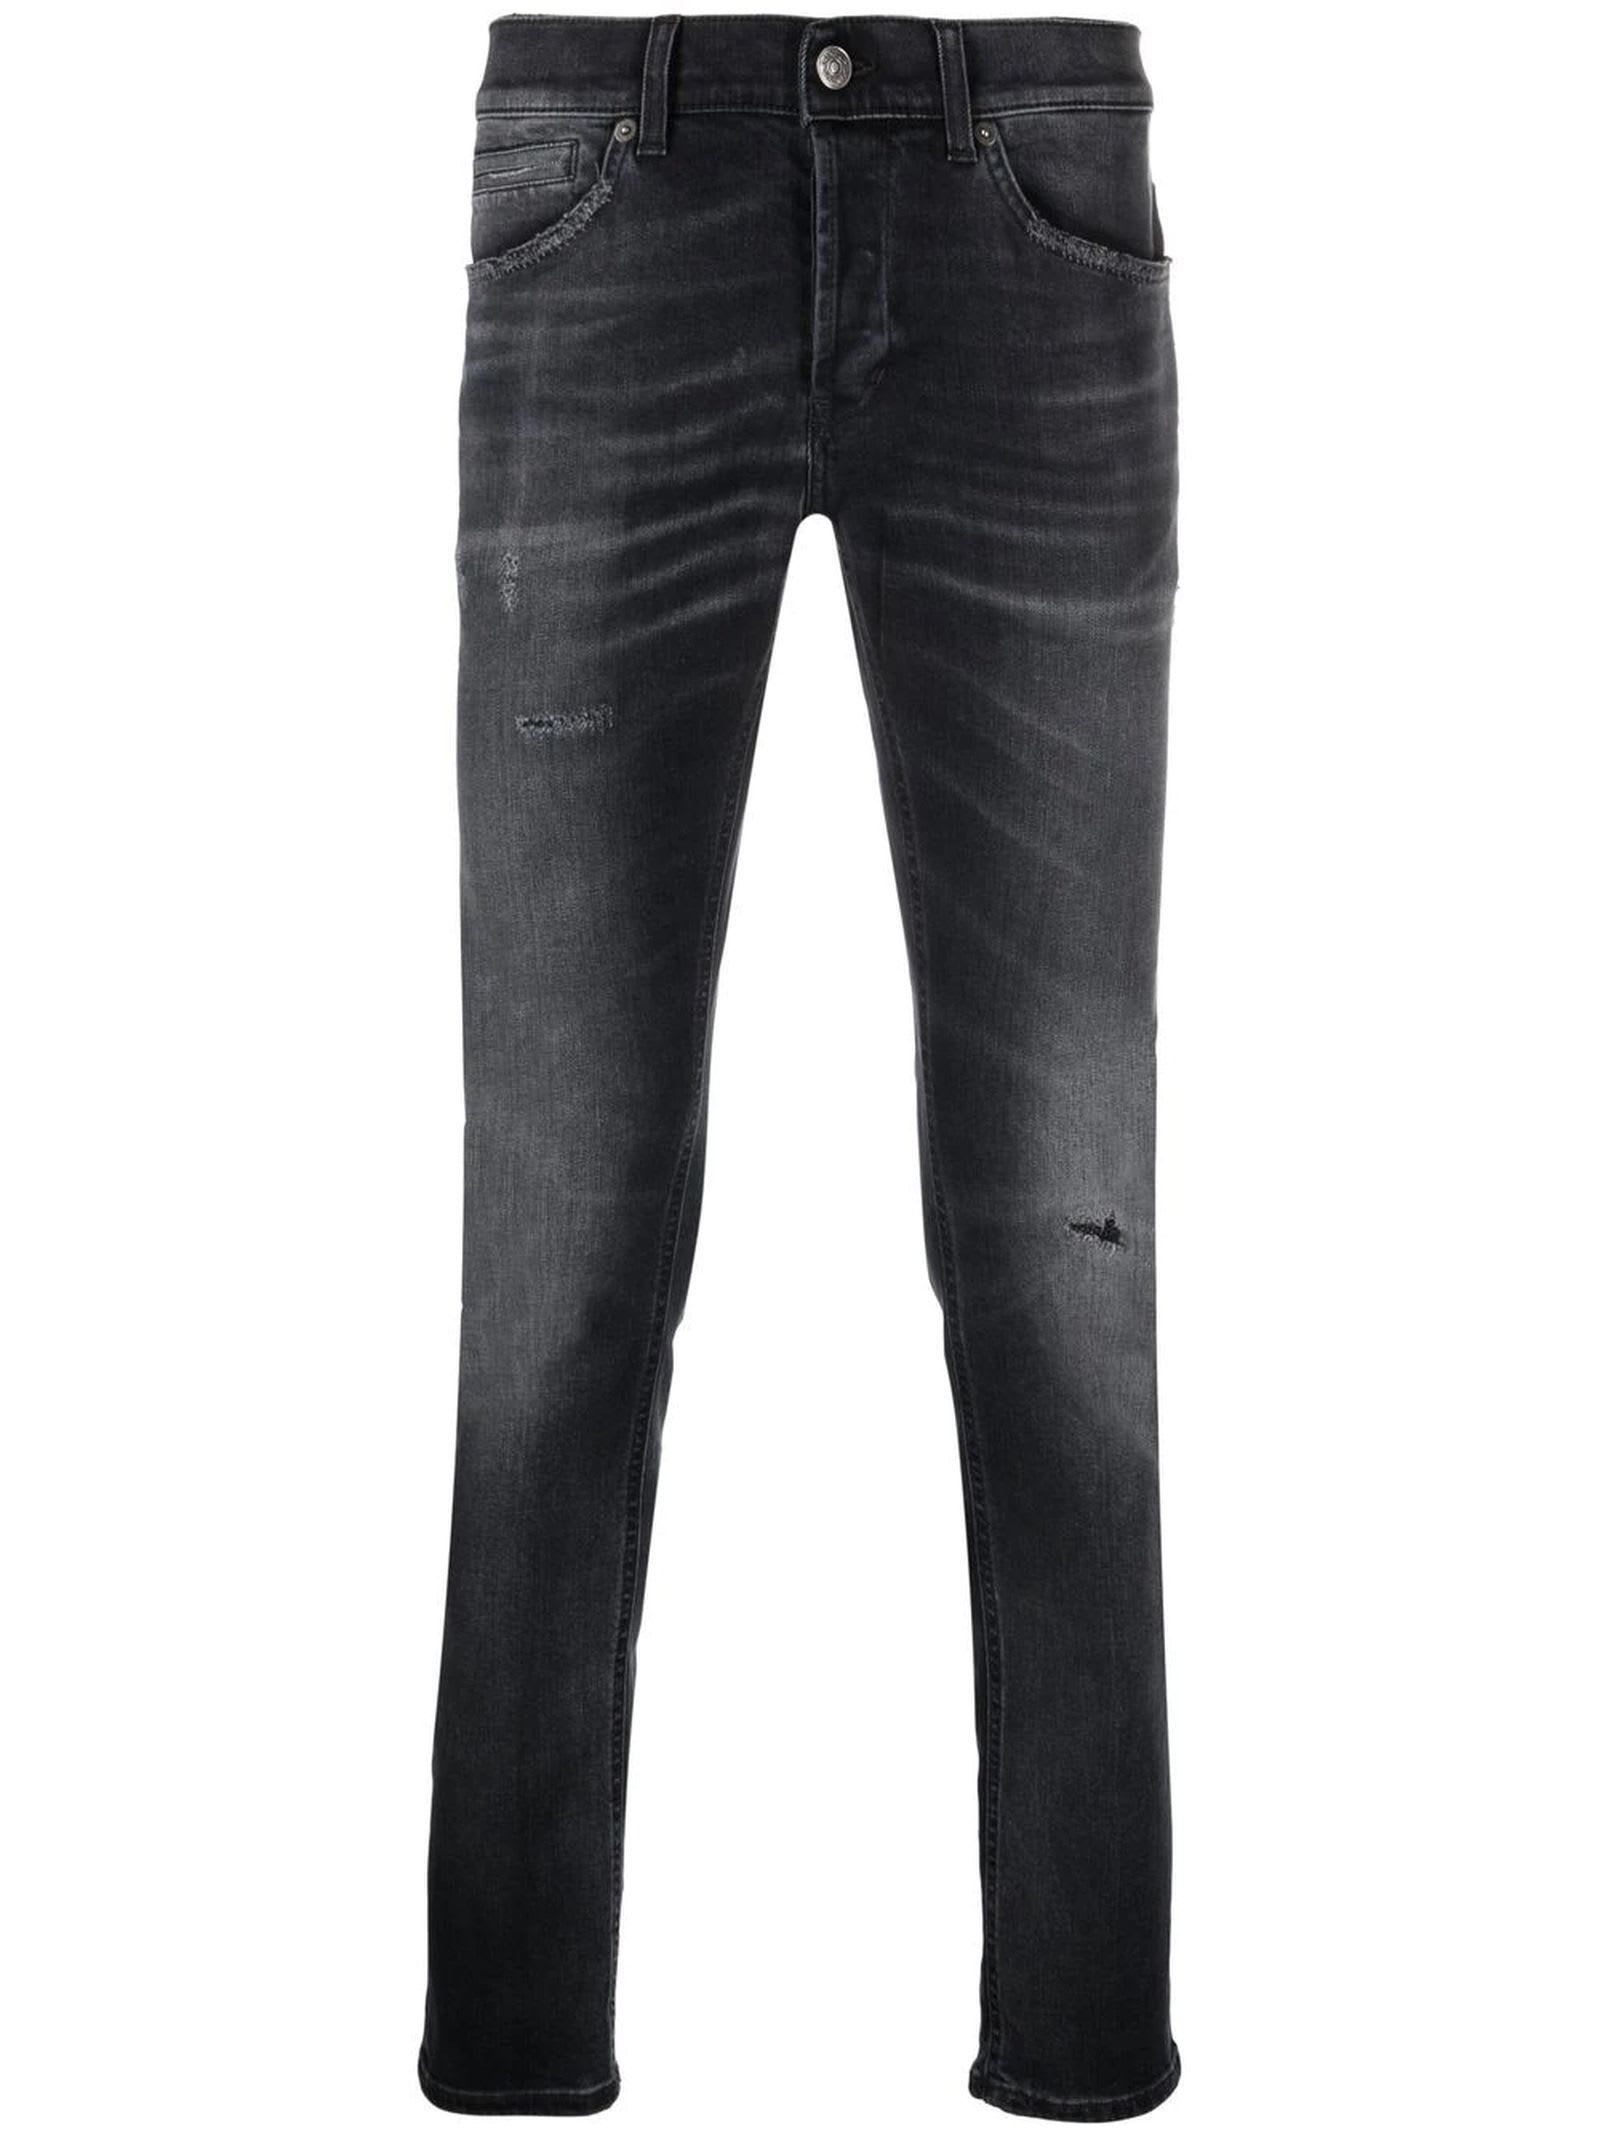 Dondup Cinder Black Organic Cotton Blend Jeans